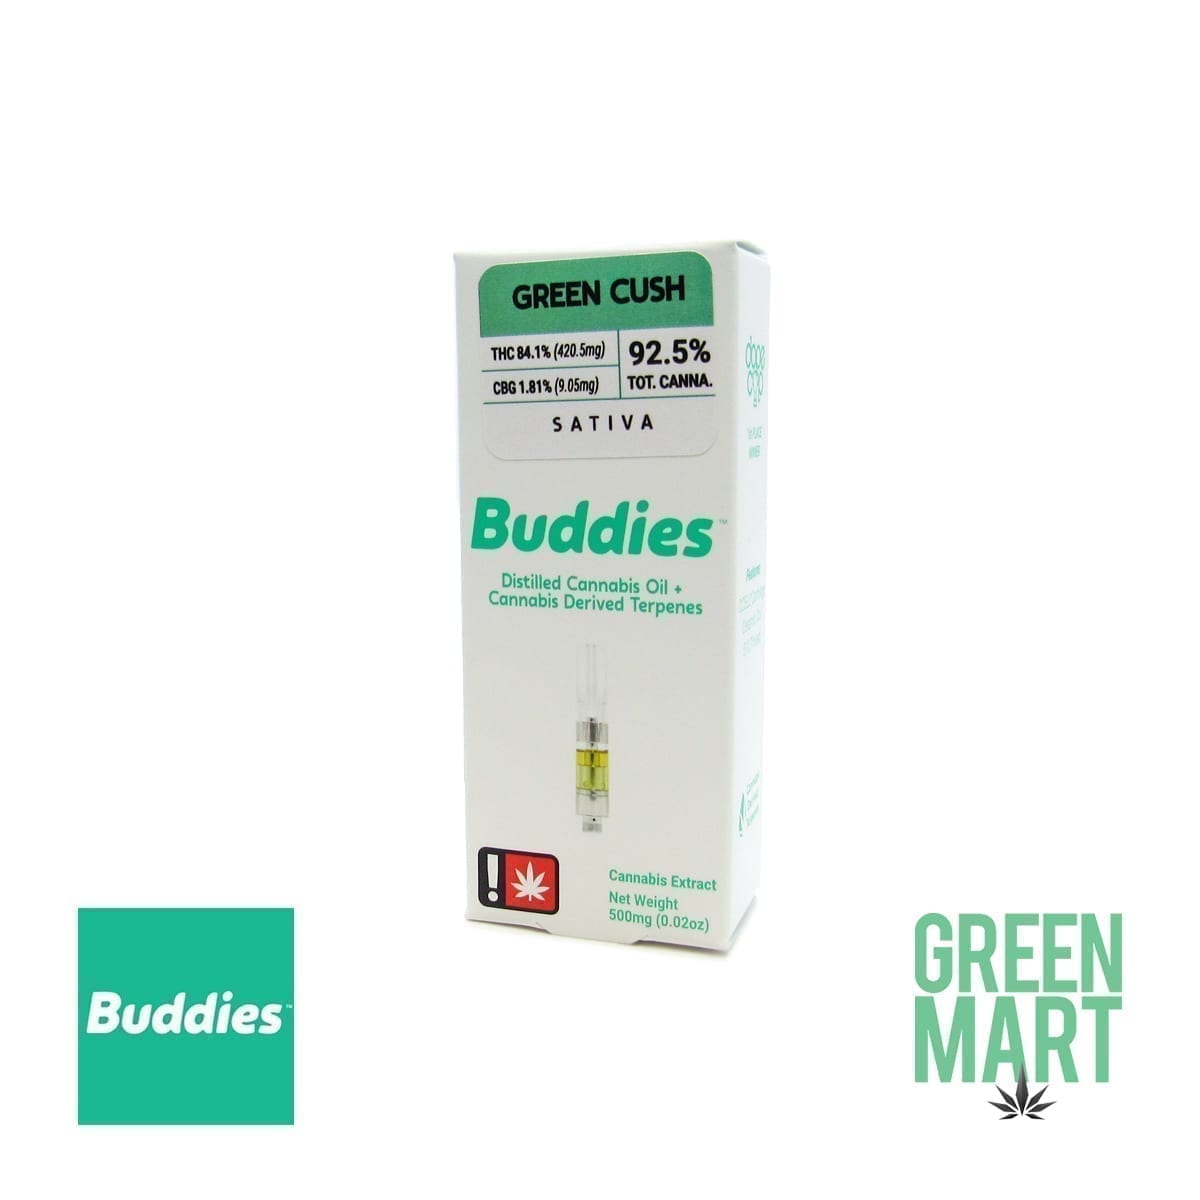 Buddies Brand Distillate Cartridge - Green Cush